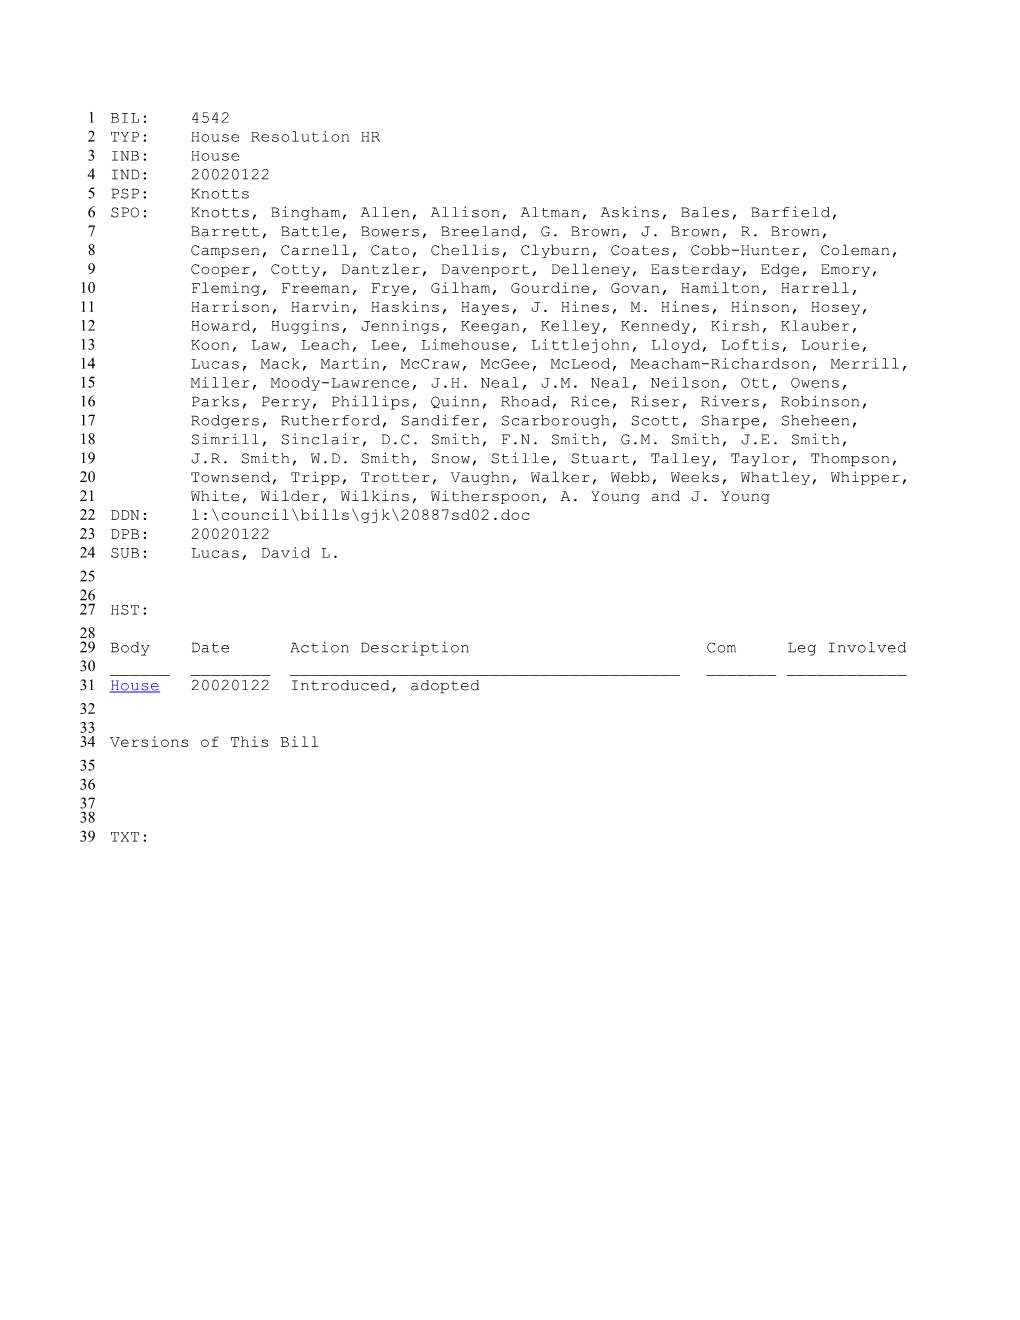 2001-2002 Bill 4542: Lucas, David L. - South Carolina Legislature Online